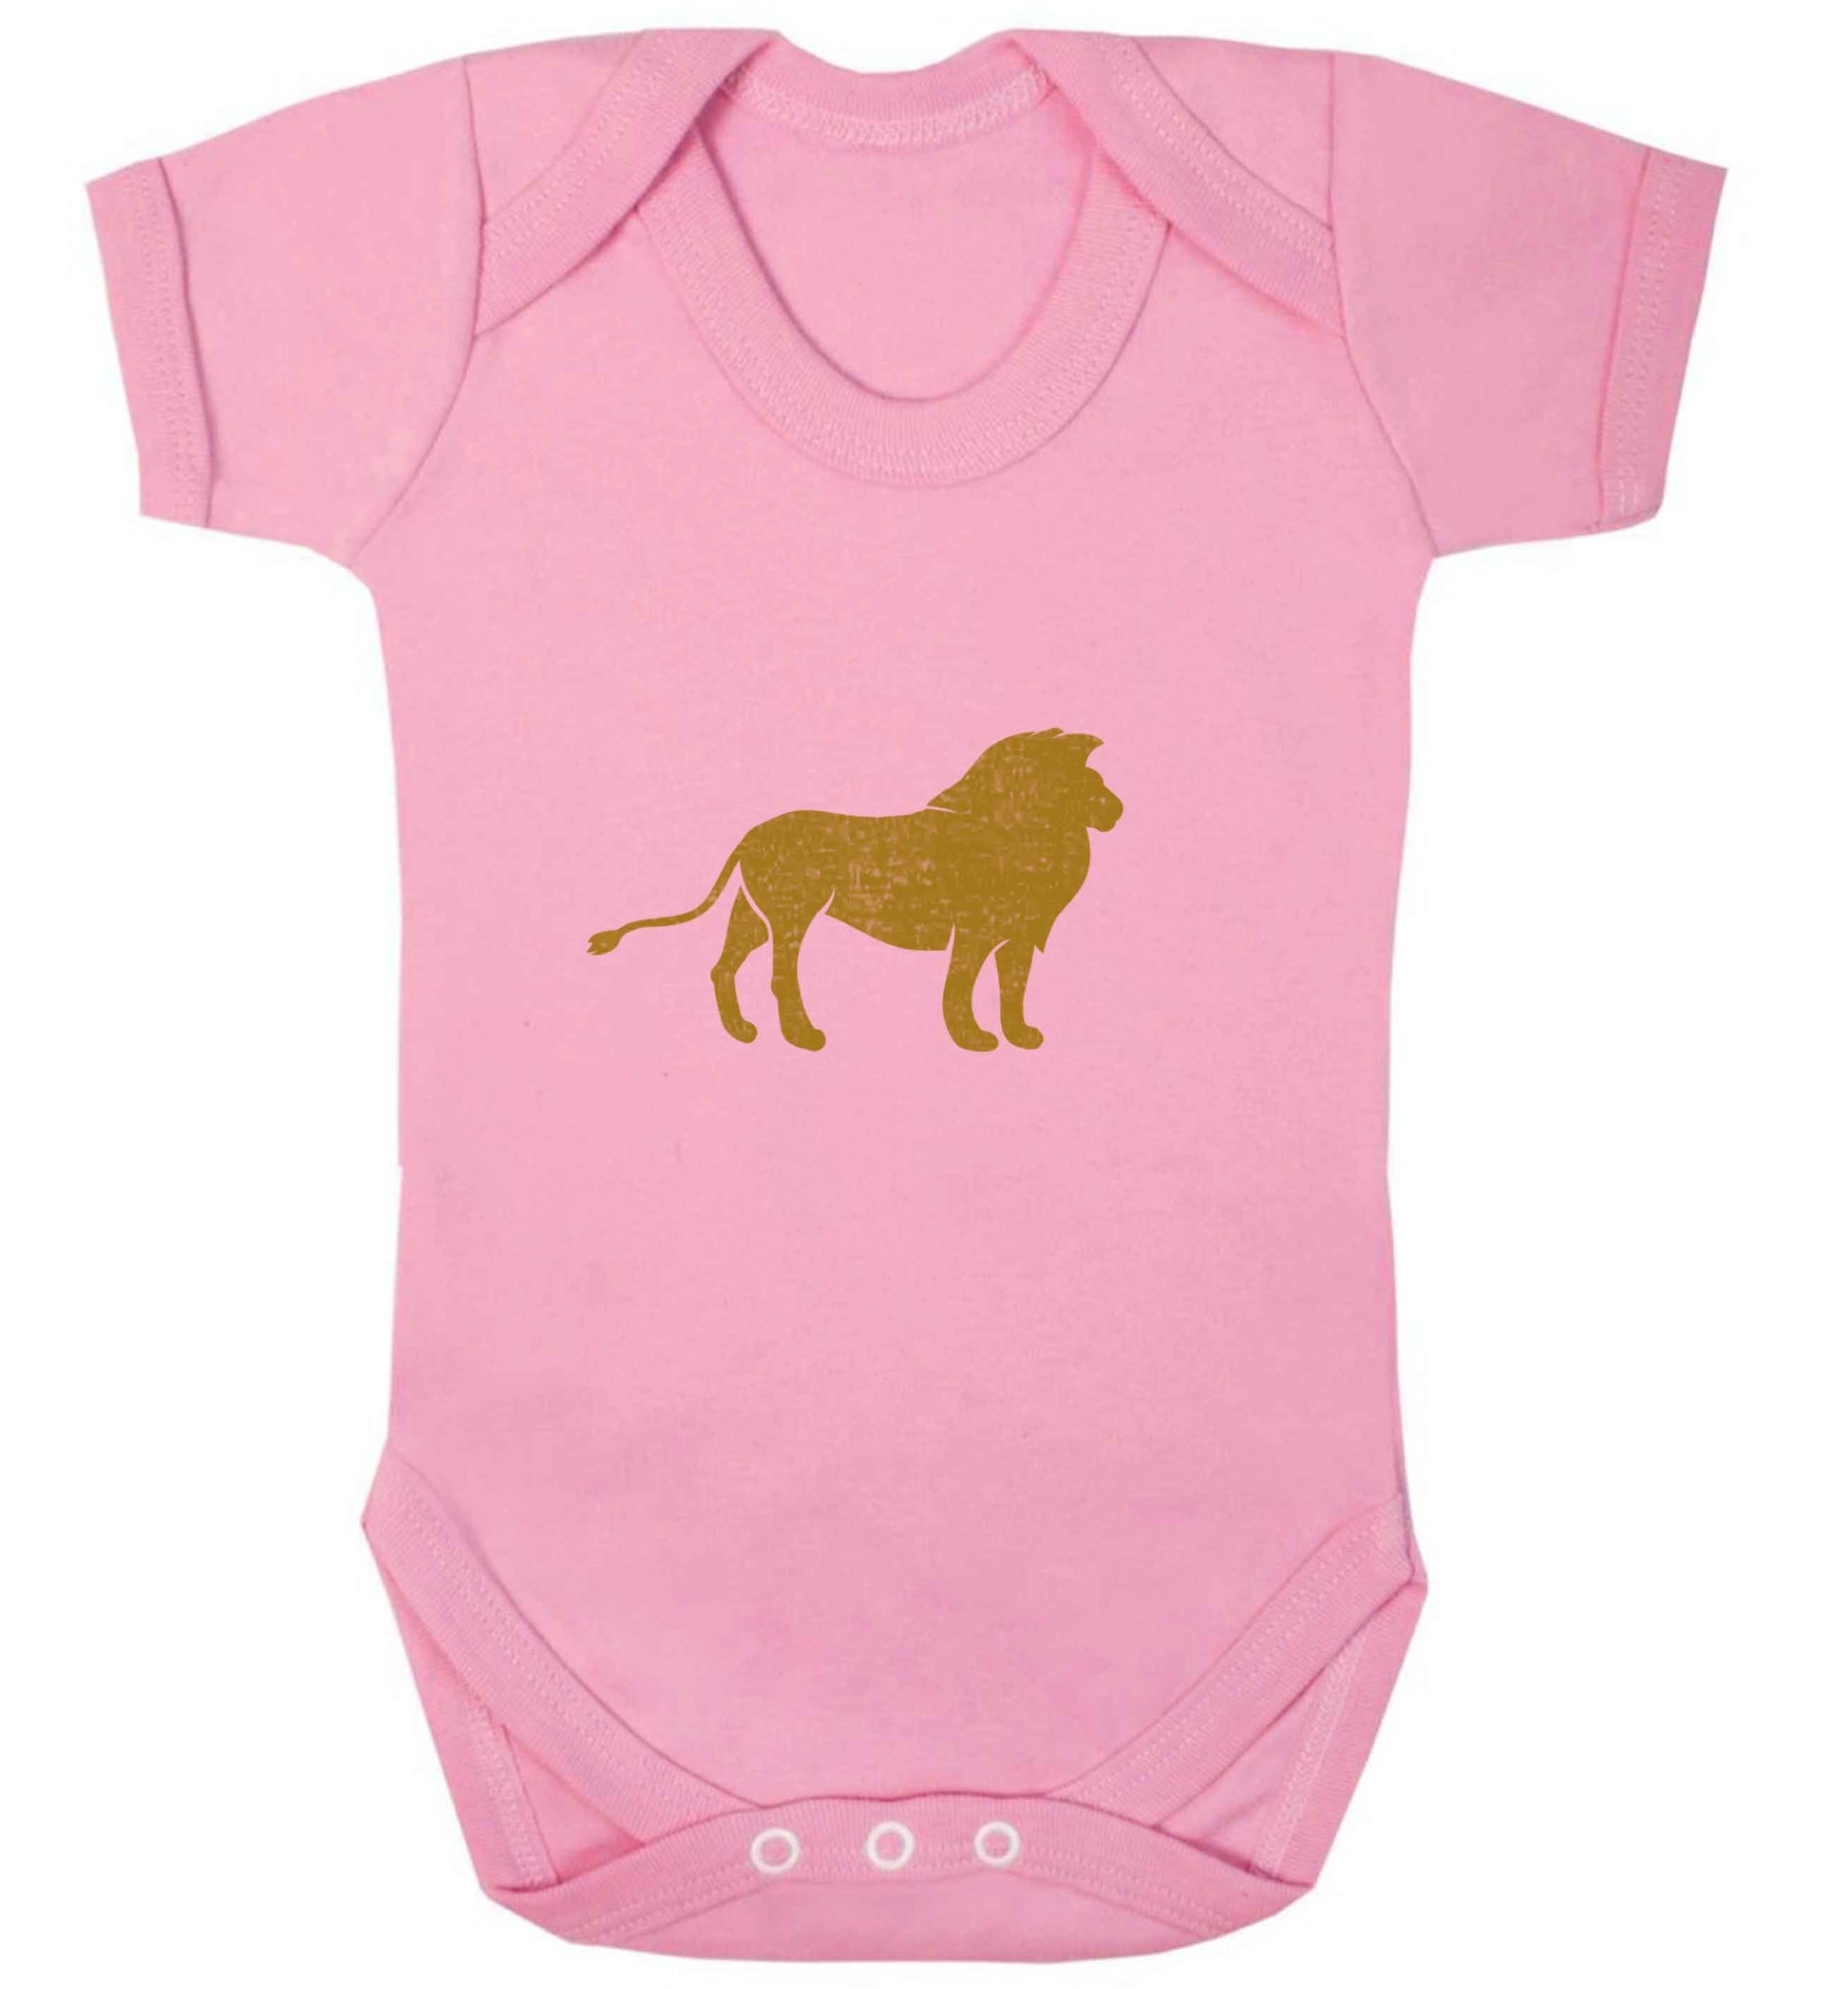 Gold lion baby vest pale pink 18-24 months